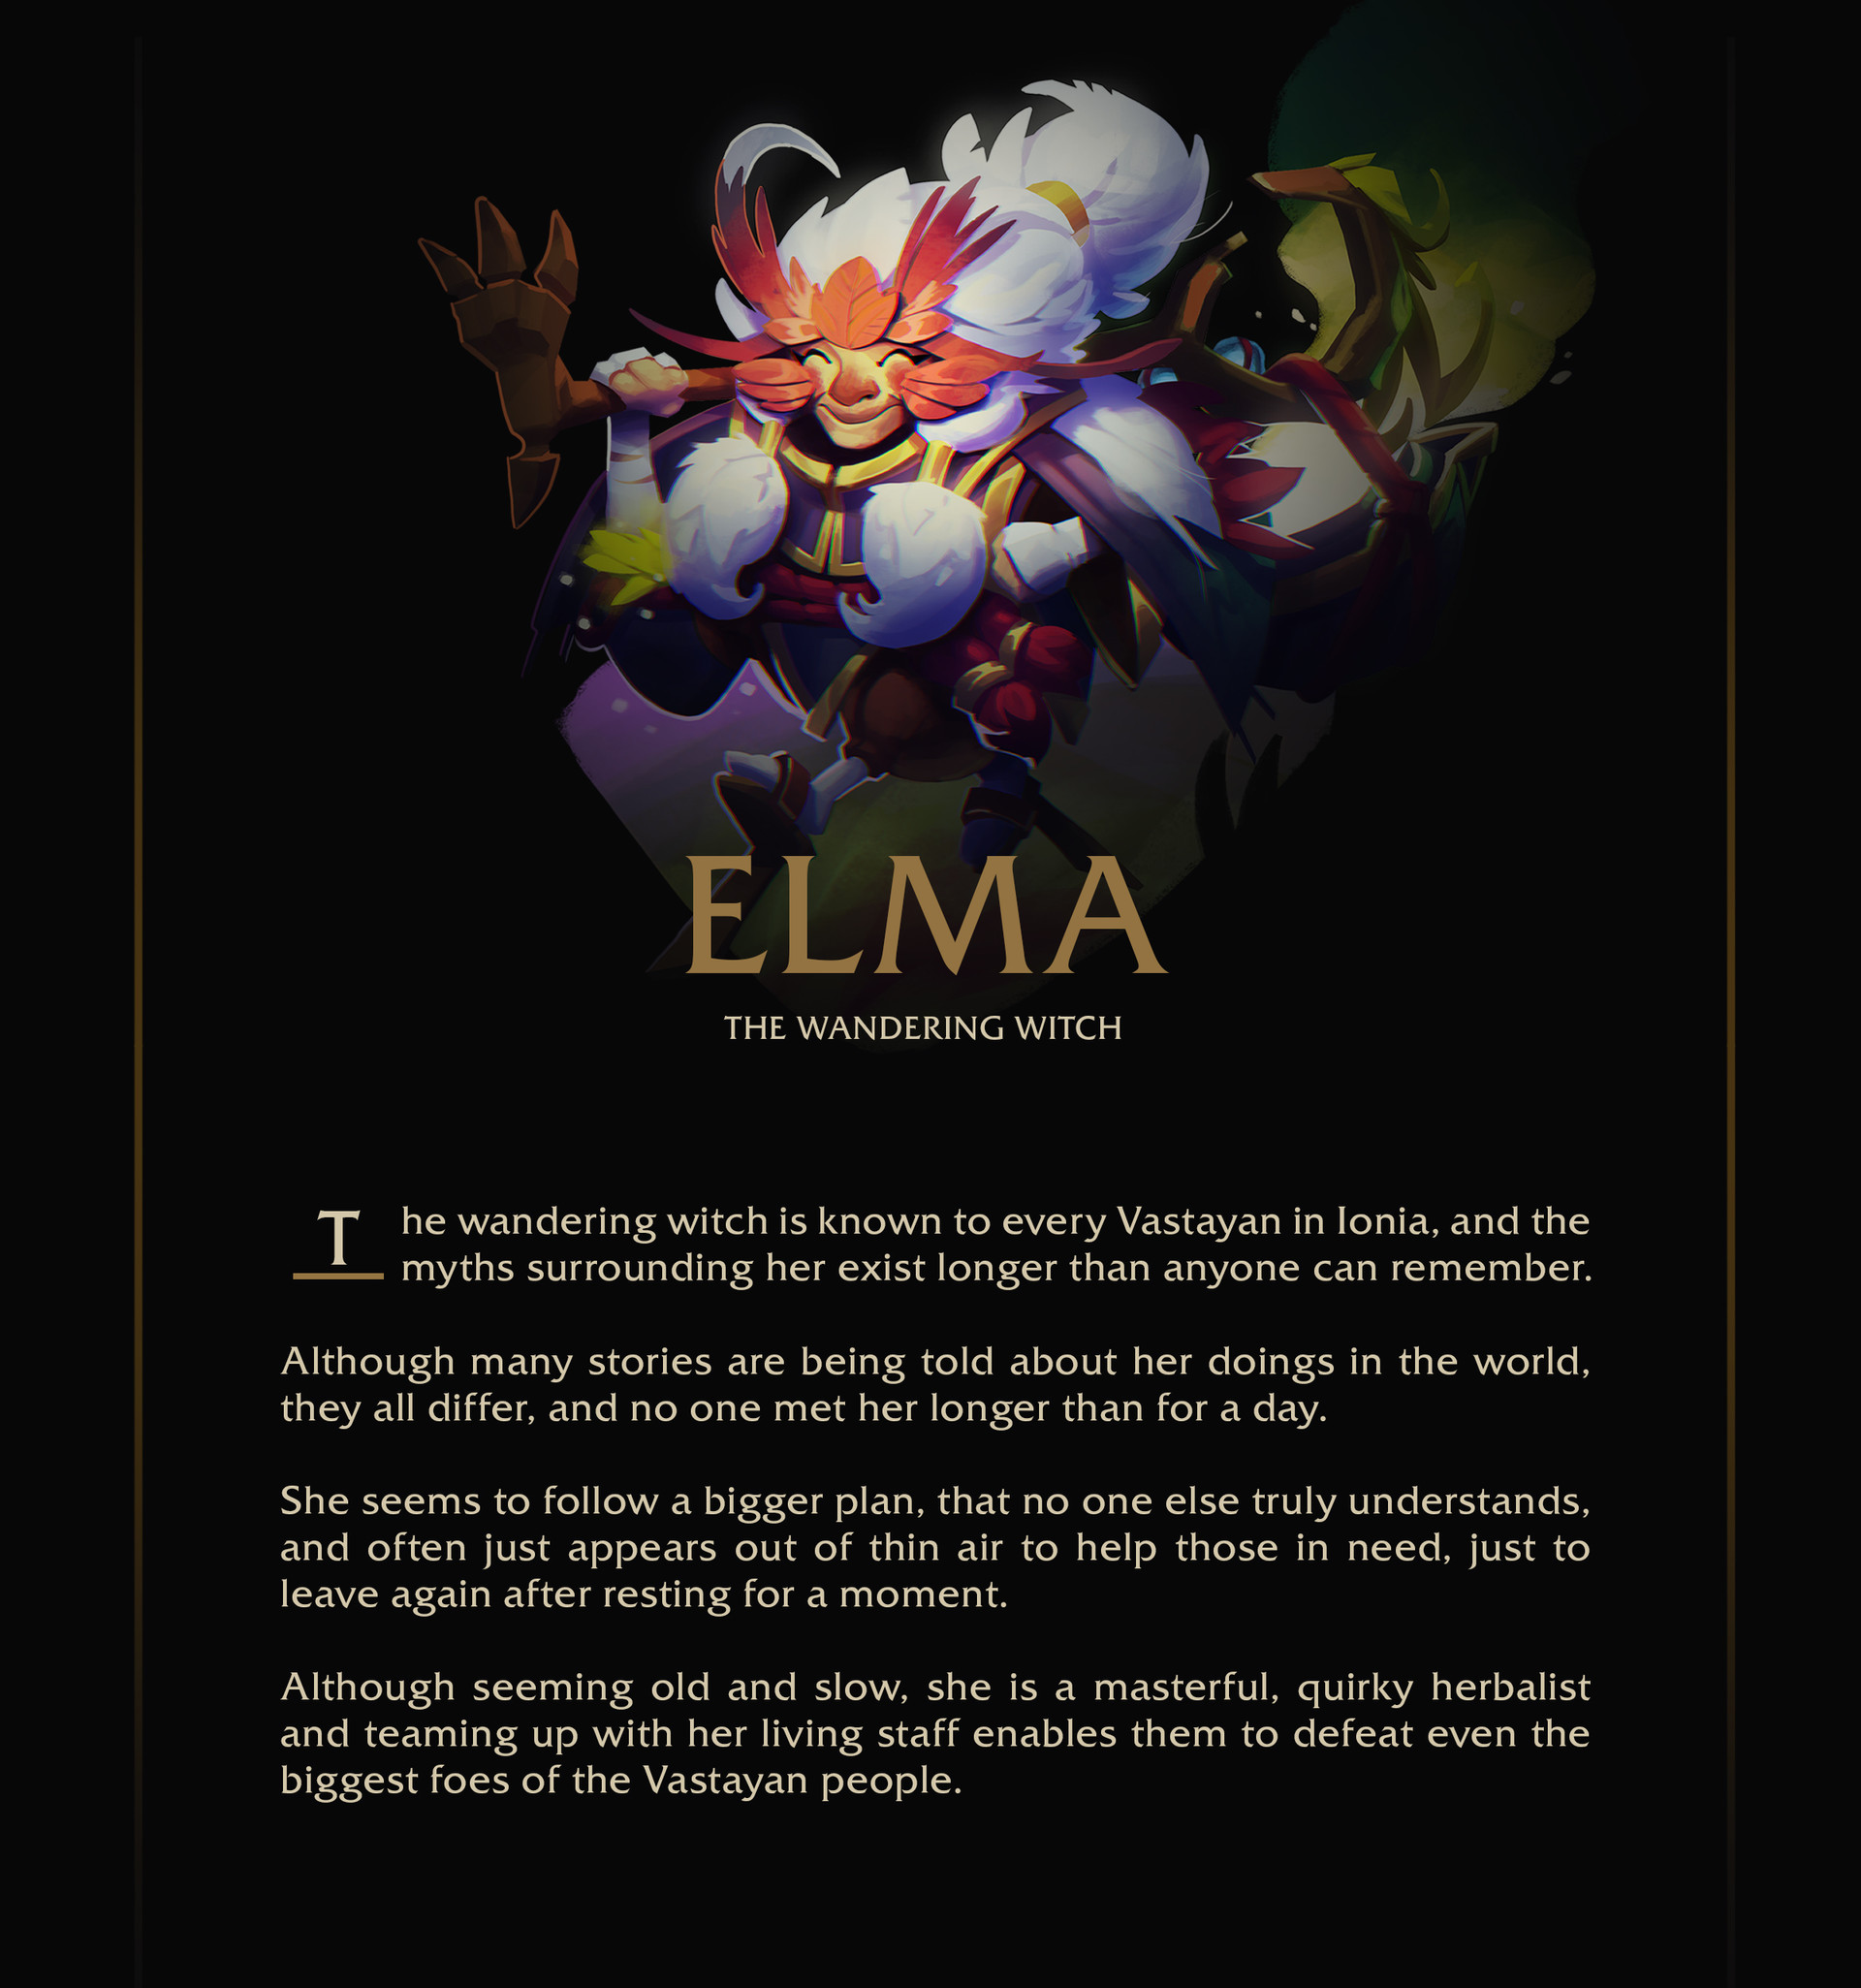 [Návrh šampiona] Elma, the Wandering Witch